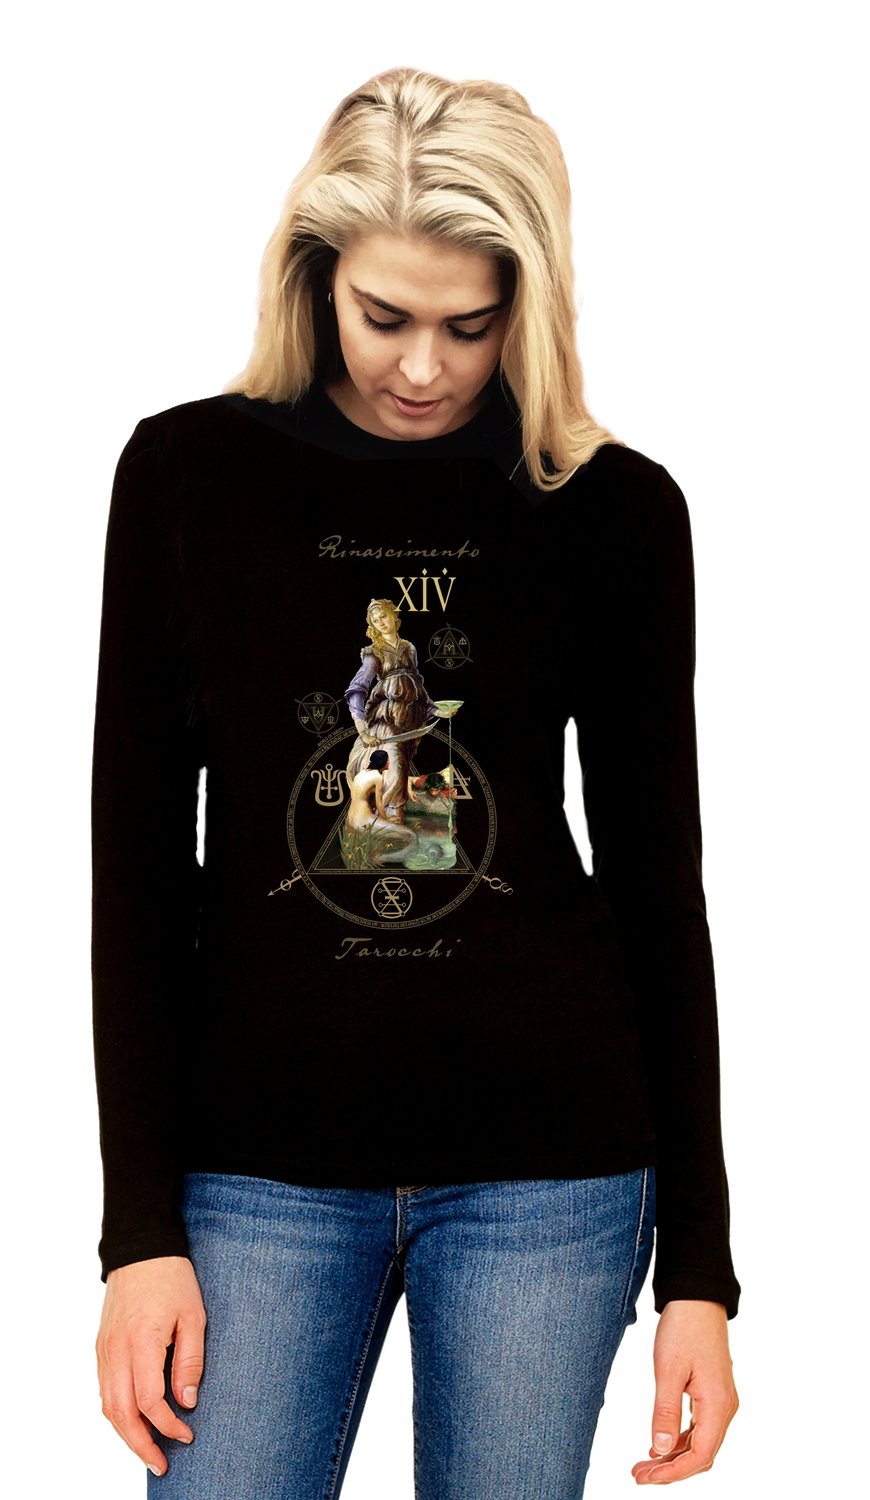 Sweatshirt With Rinascimento Tarocchi XIV Emblem